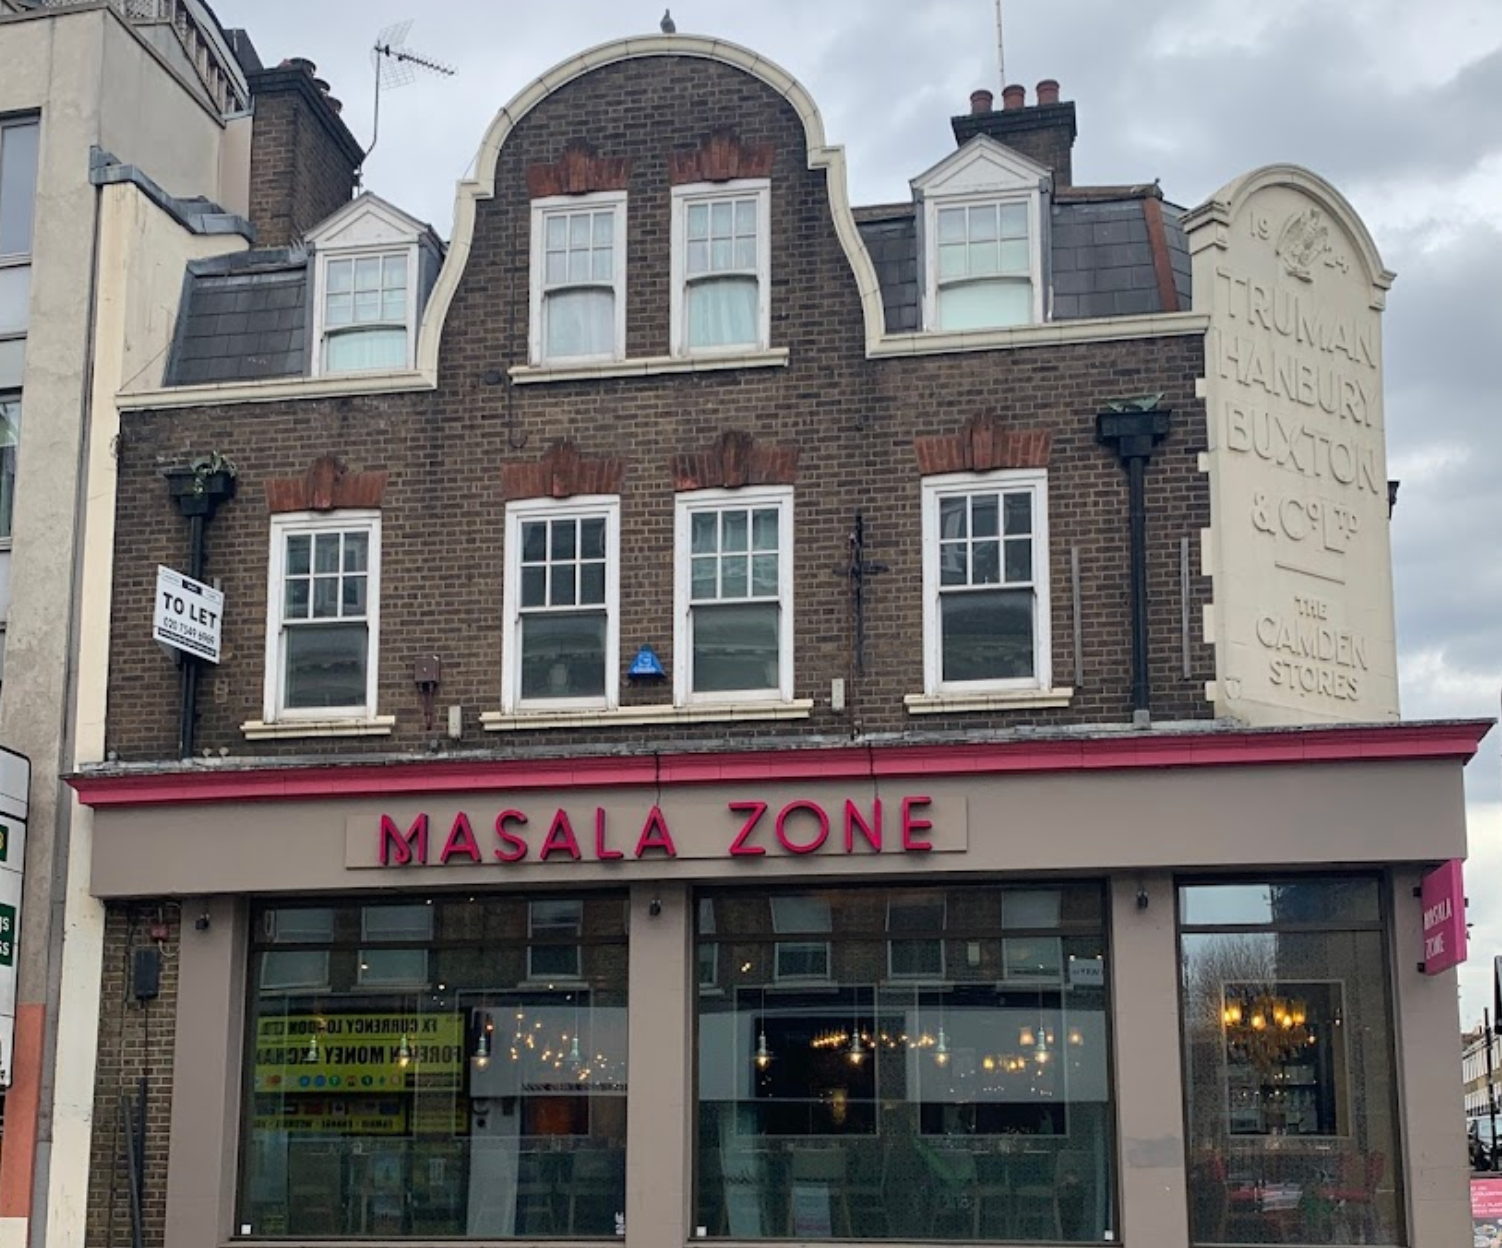 Masala zone (Camden Town)